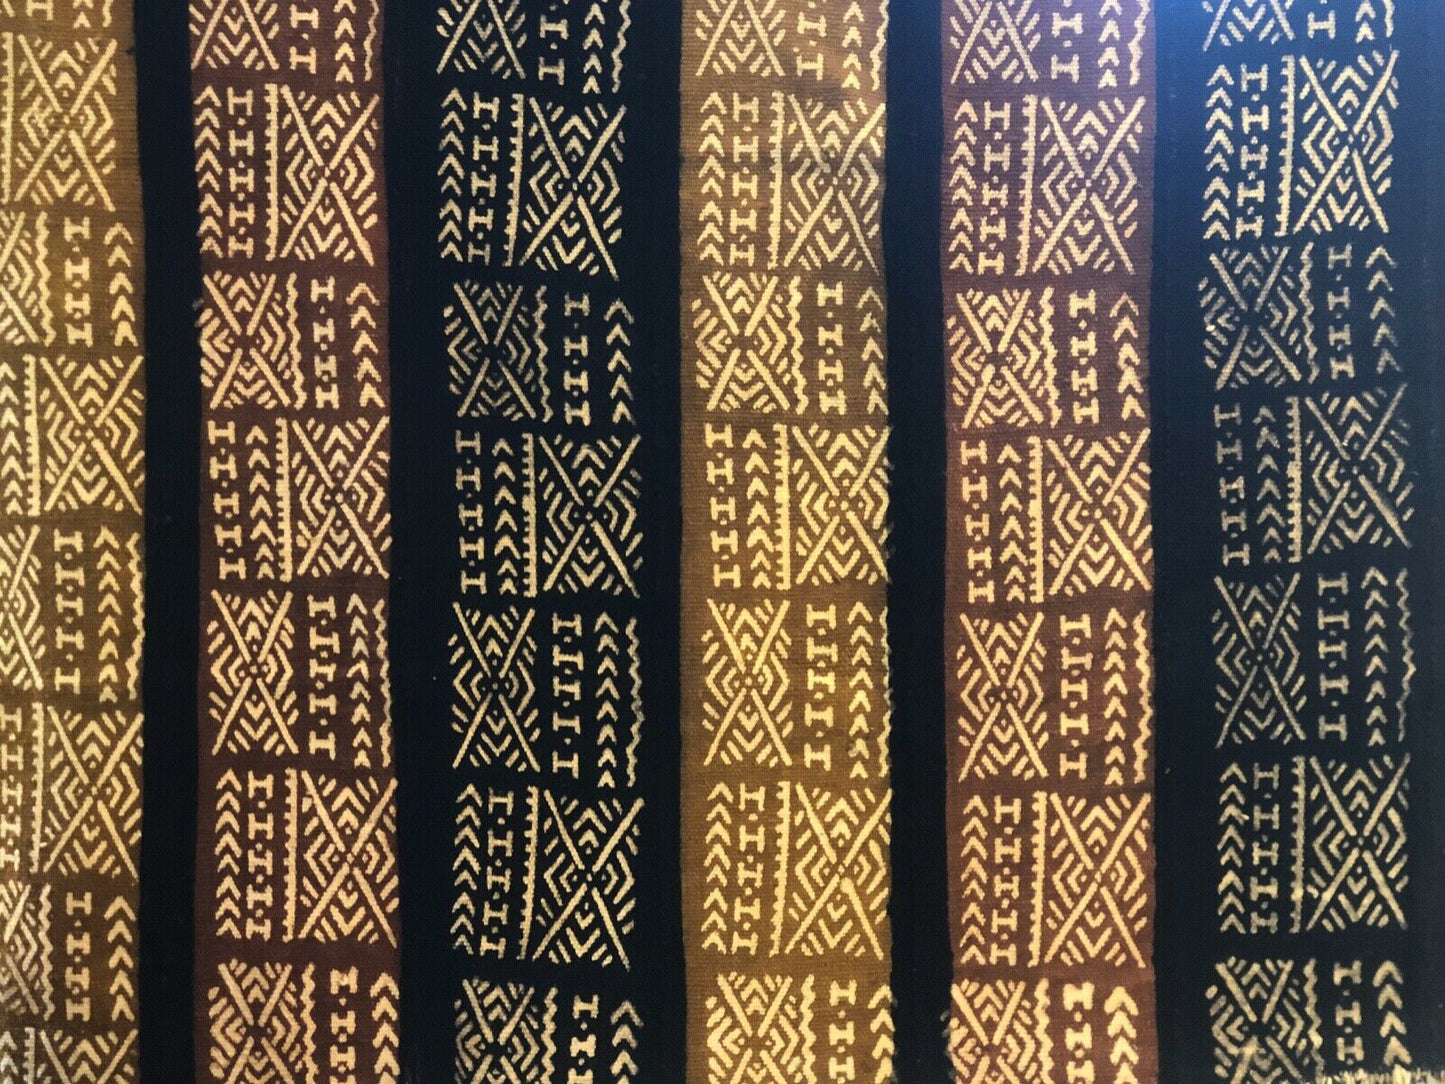 Superb Bogolan Mali Mud Cloth Textile W/ Bone Trade Beads 40" by 60" # 295